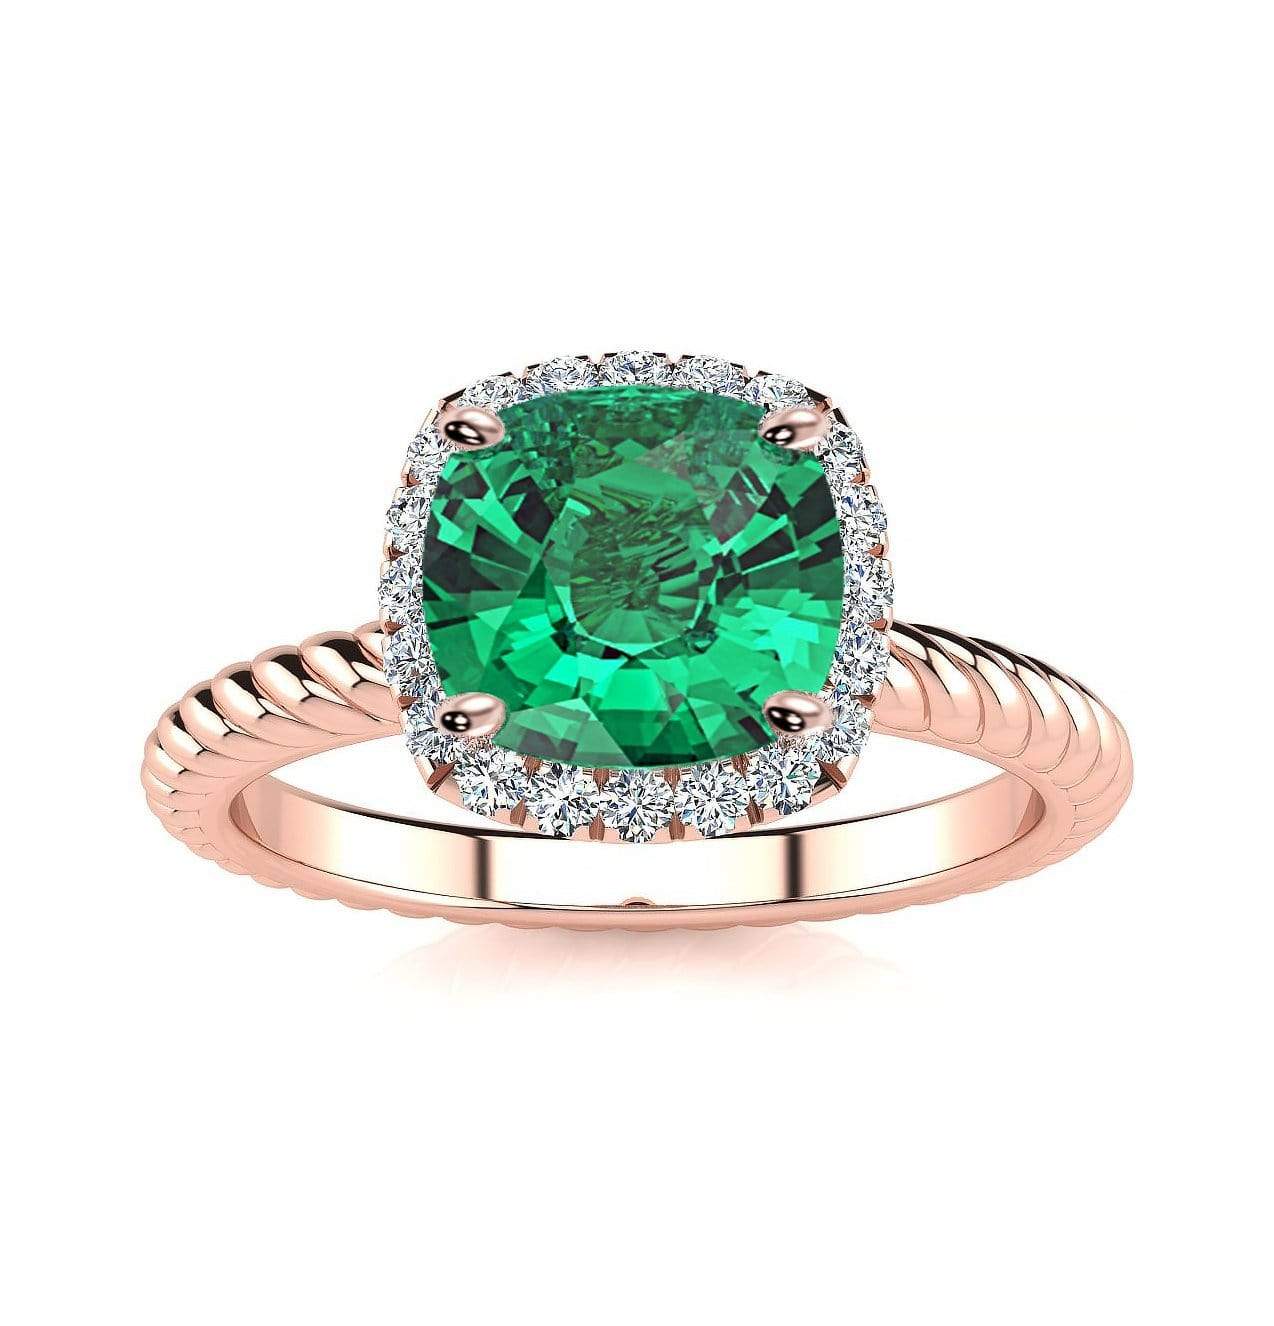 Gabriella Antique Cushion Chatham Emerald Halo Diamond Ring